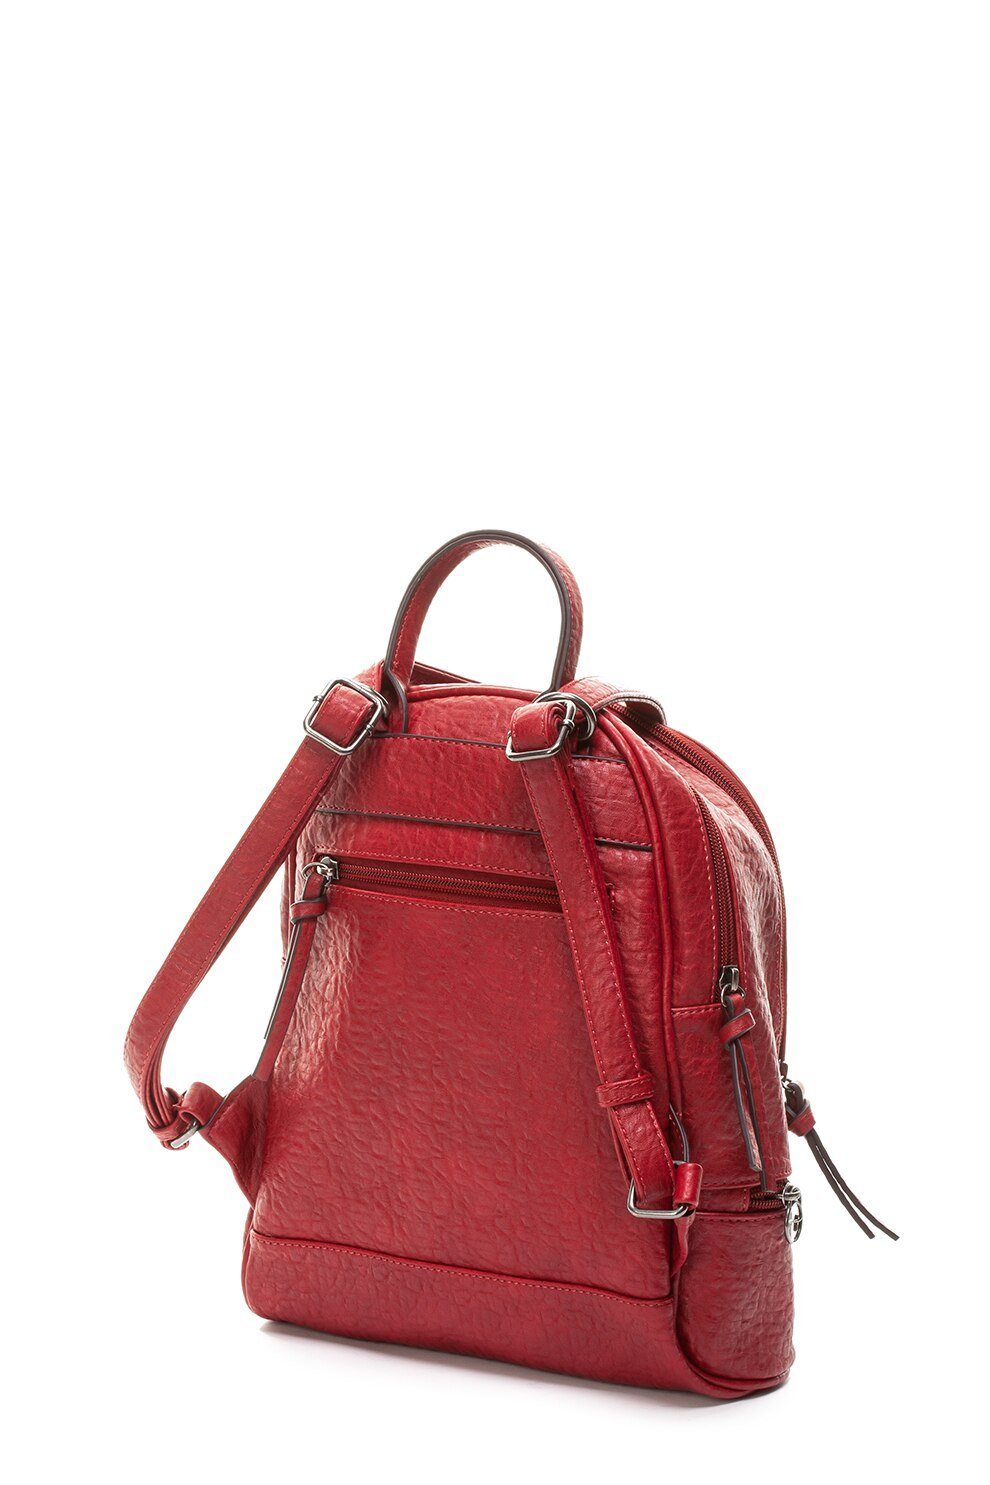 Tamaris rot Rucksack Backpack Udele Handbag chili (Set), Damen Handtasche